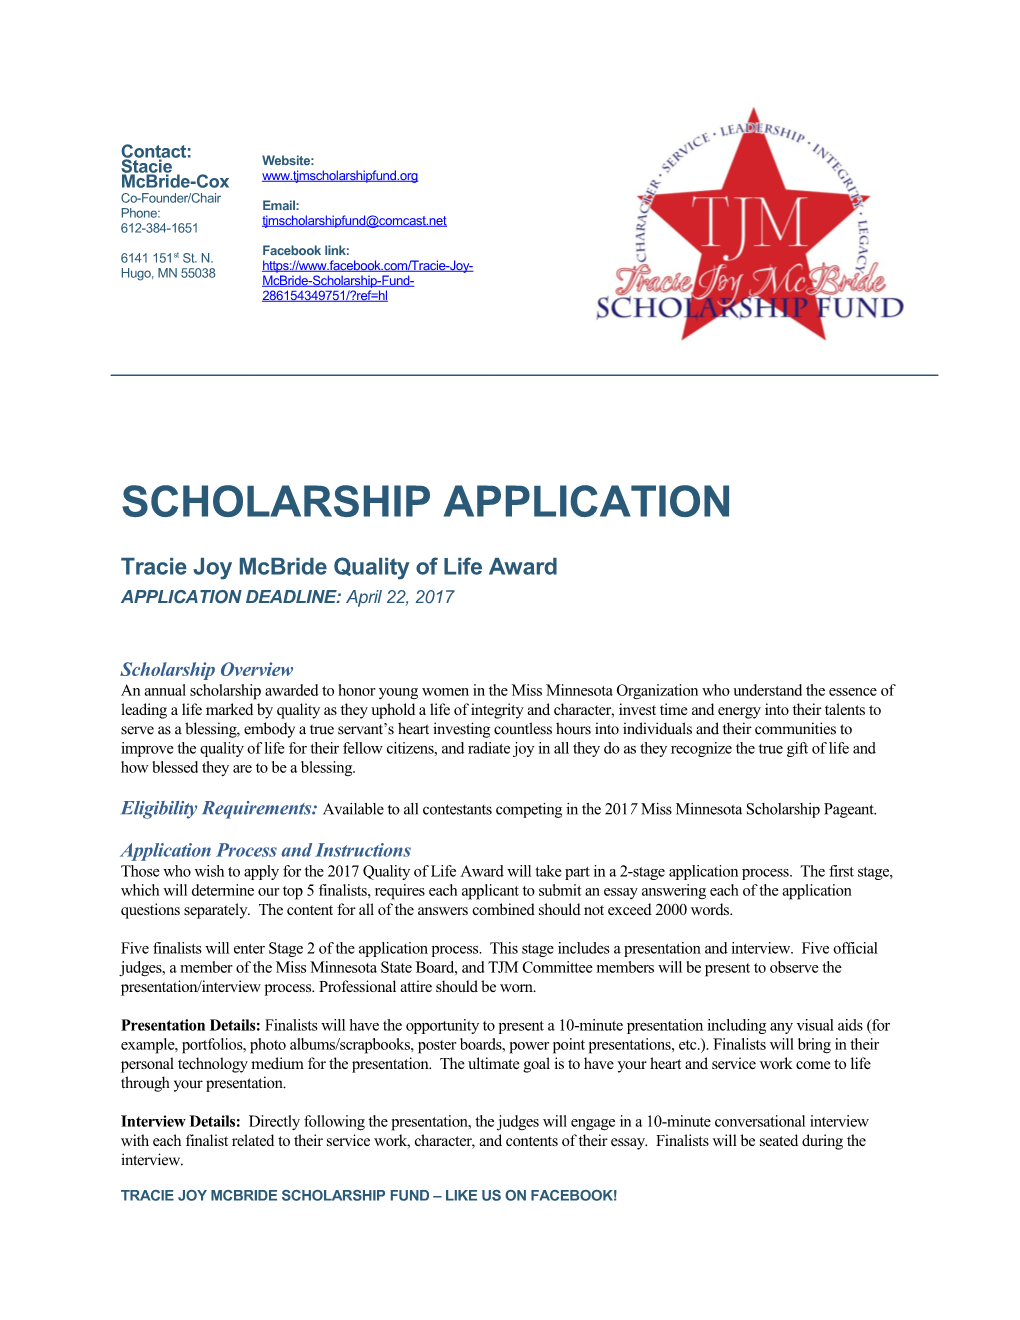 Tracie Joy Mcbride Quality of Life Scholarship Application